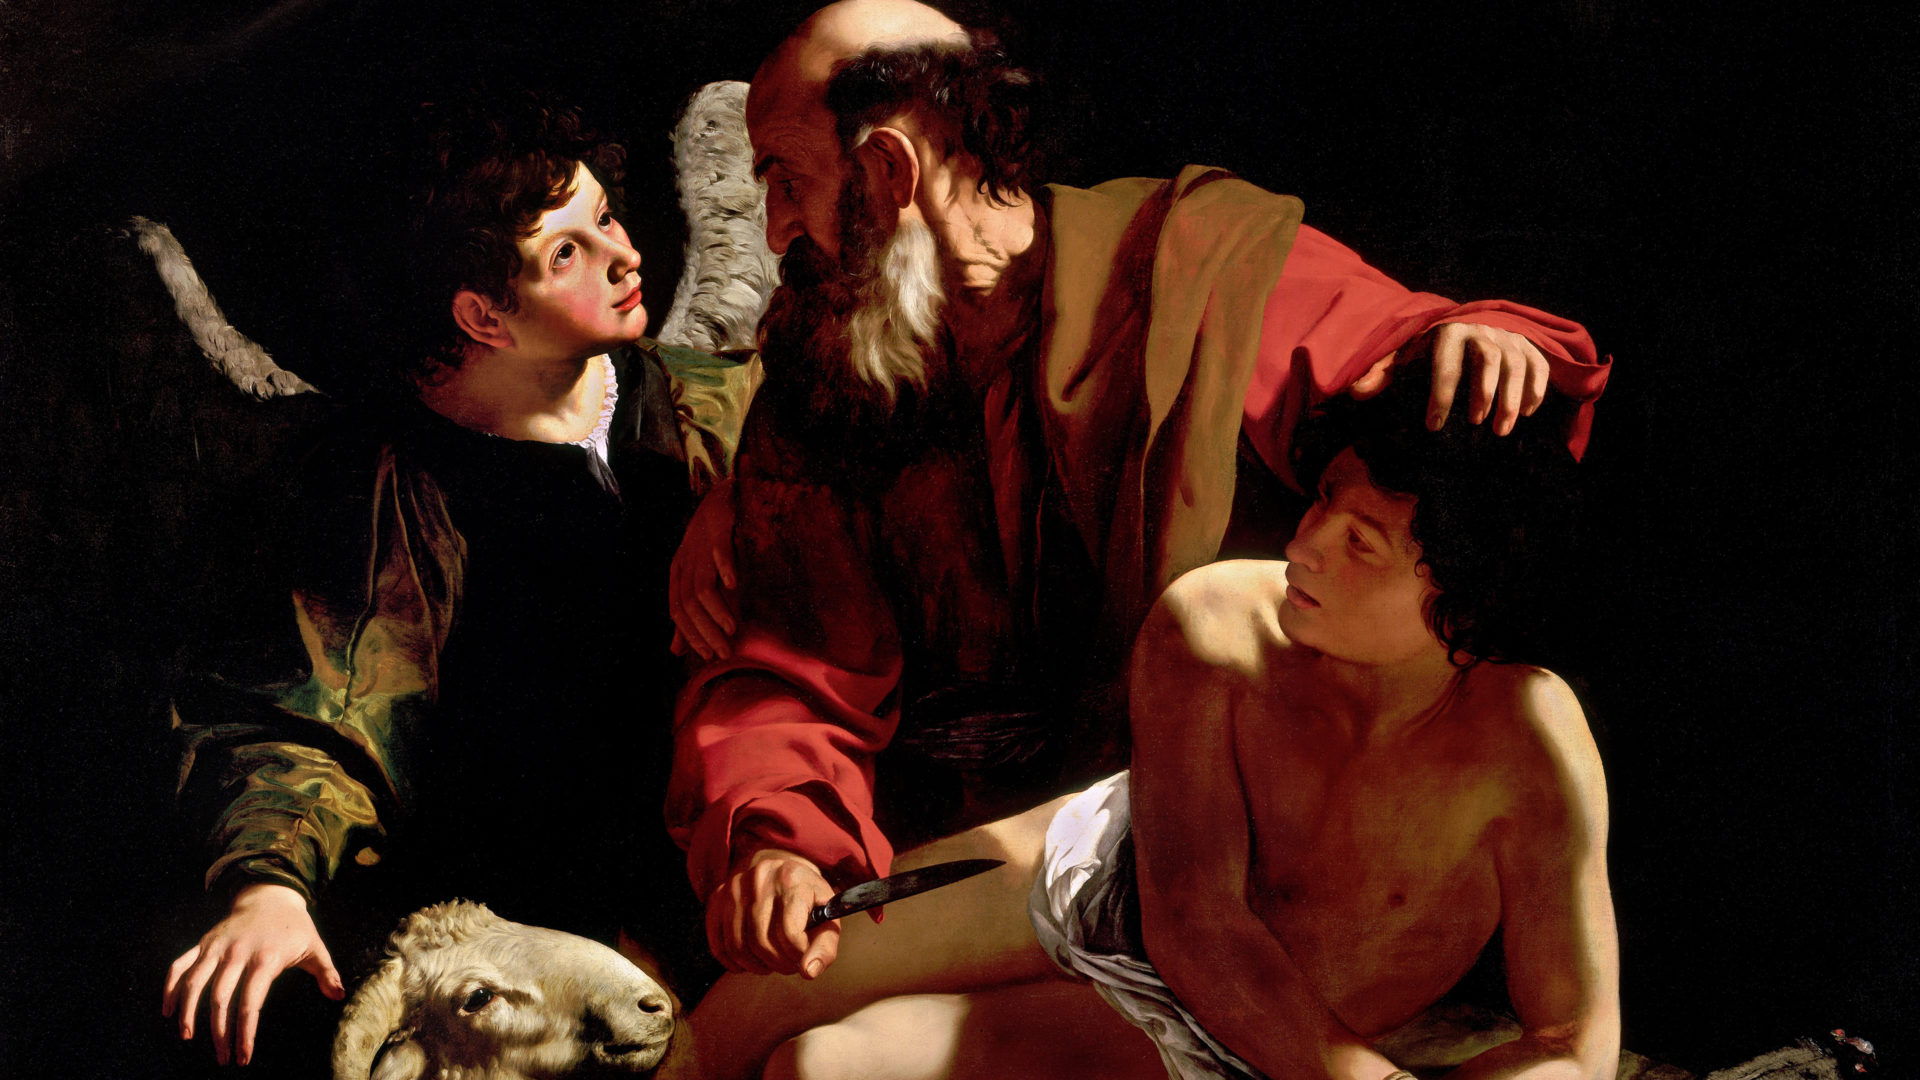 Caravaggio, "Sacrifice of Isaac" (c. 1603)